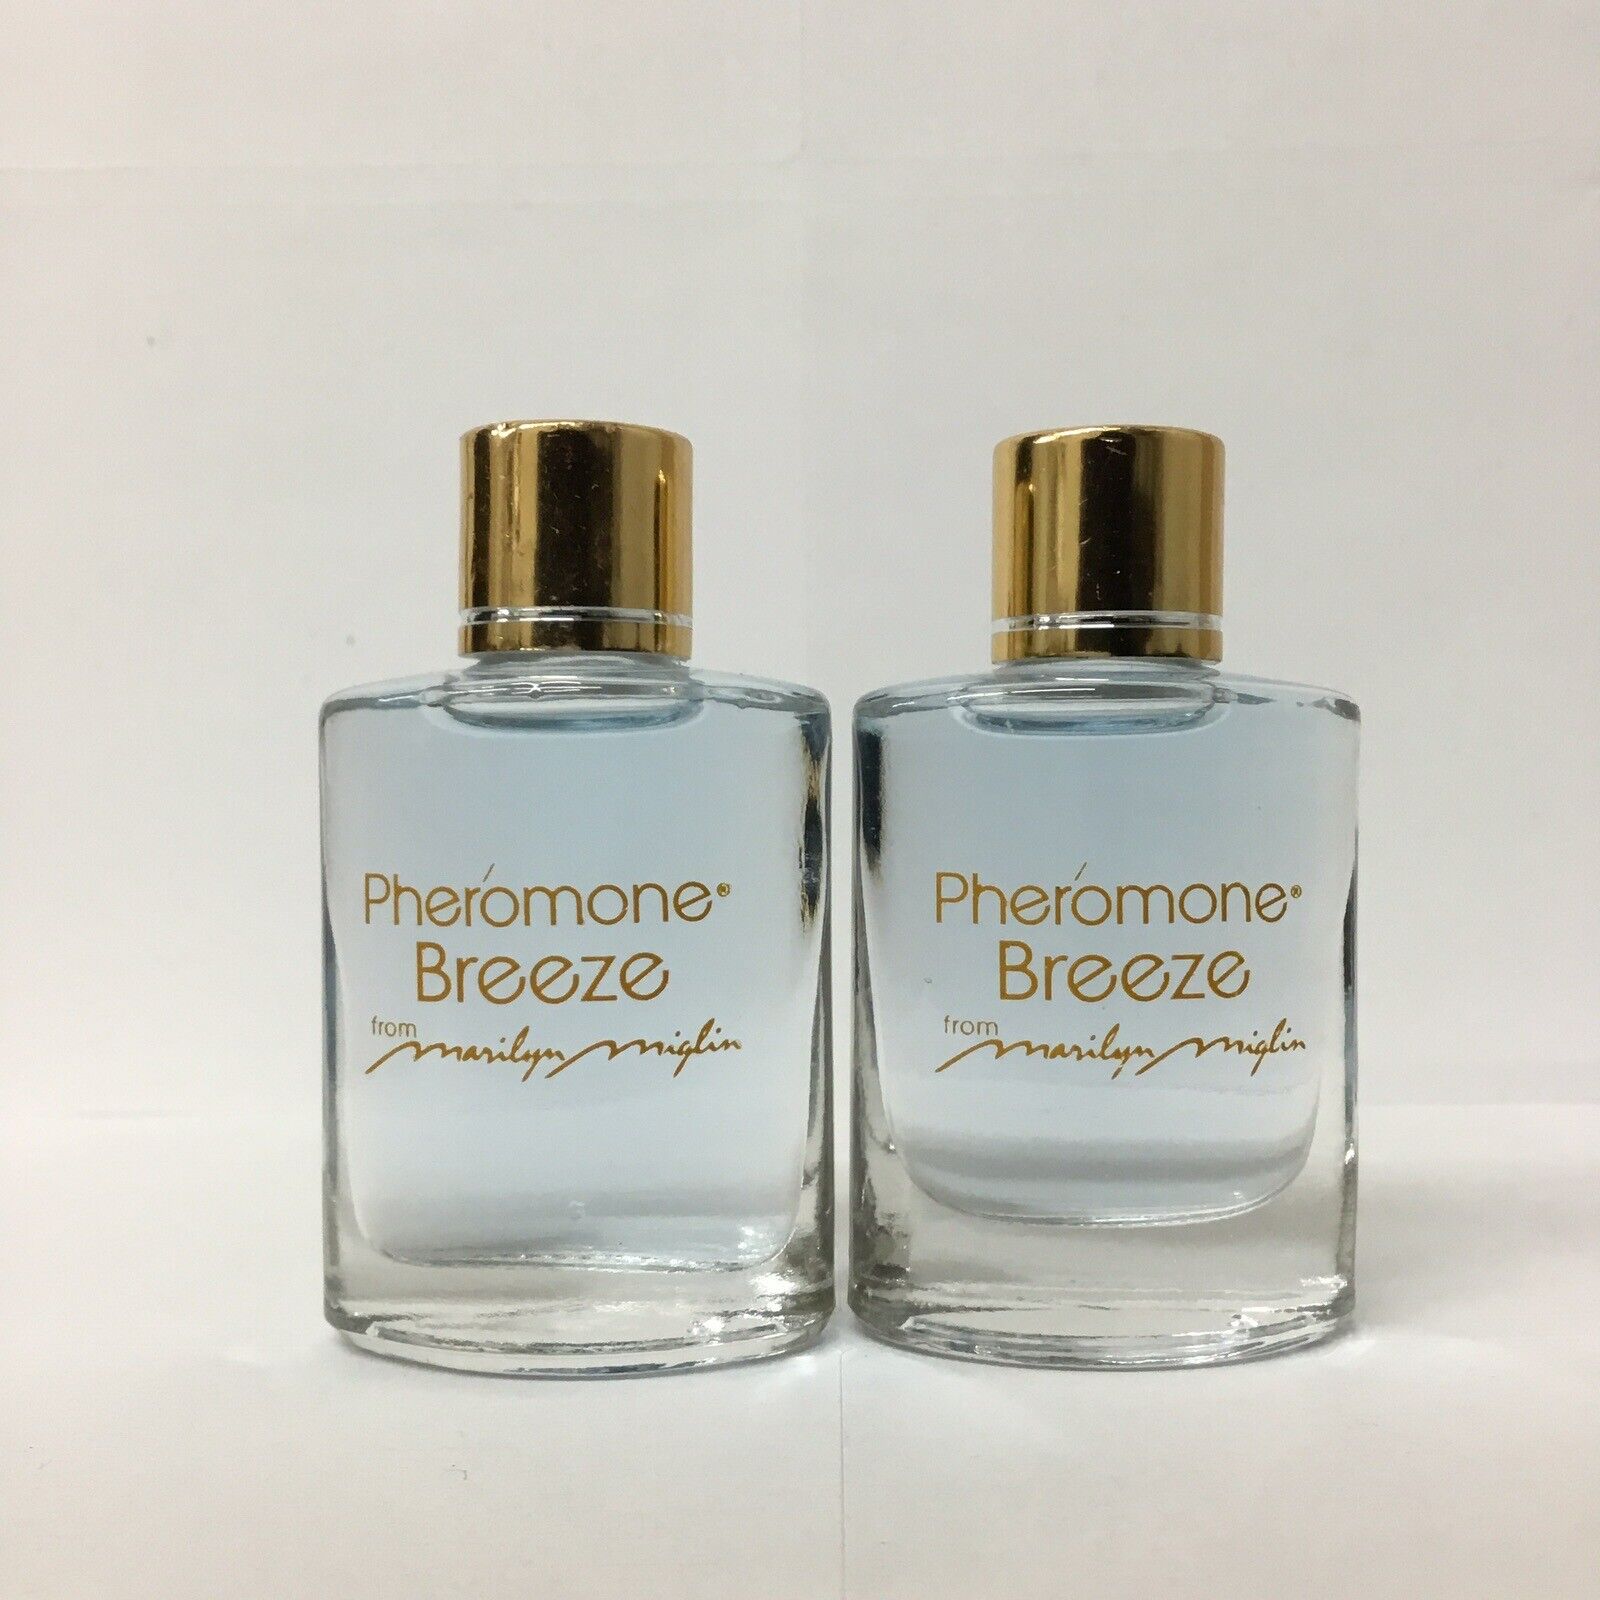 Lot of 2 - Pheromone Breeze by Marilyn Miglin EDP Splash 0.41oz - As Pictured